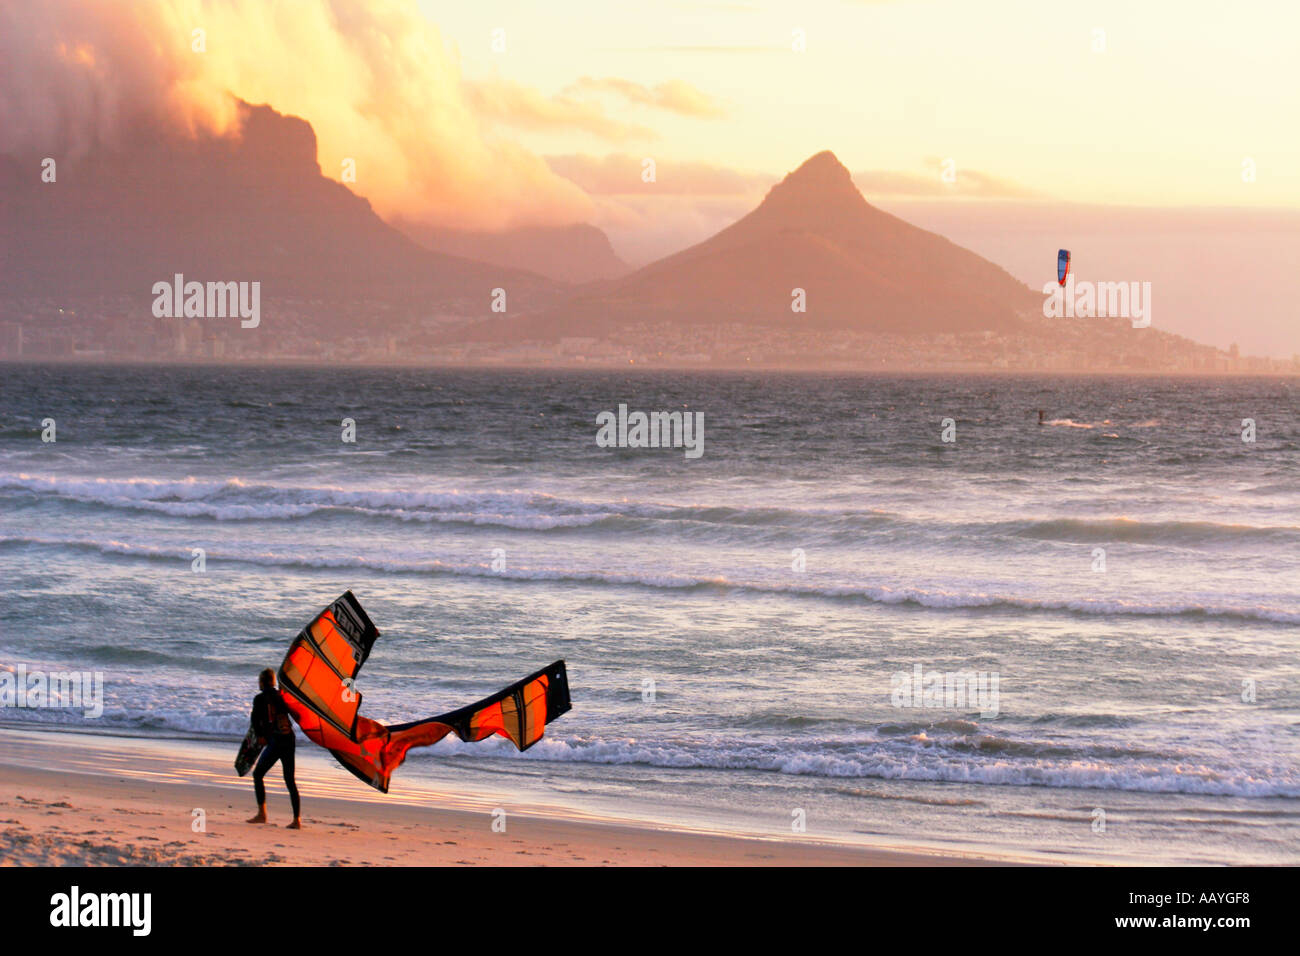 south africa cape town blouberg beach table mountain sunset kitesurfer Stock Photo